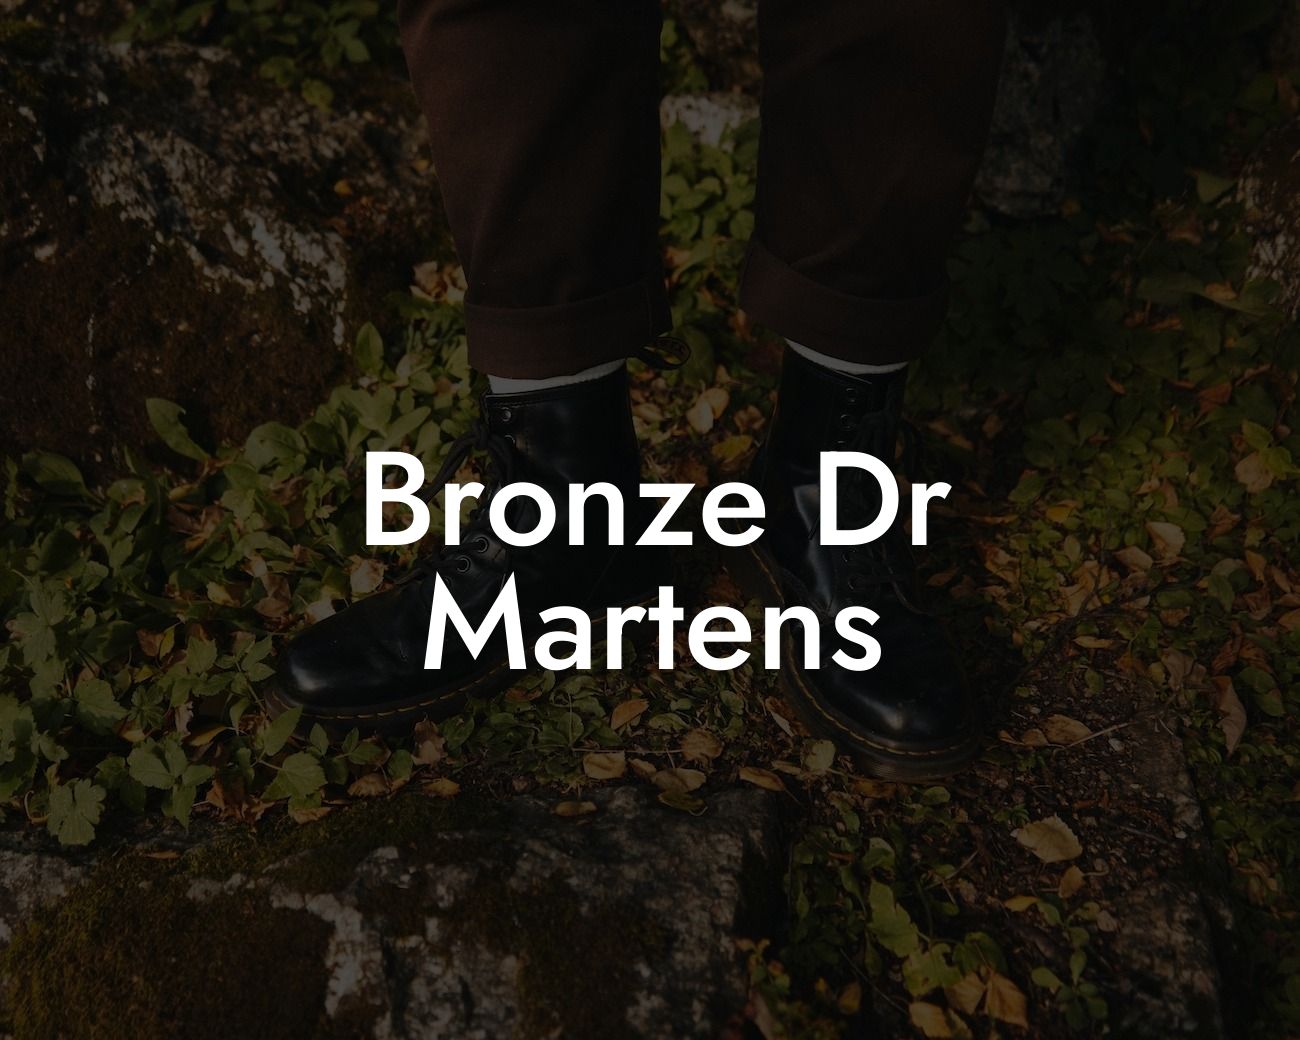 Bronze Dr Martens